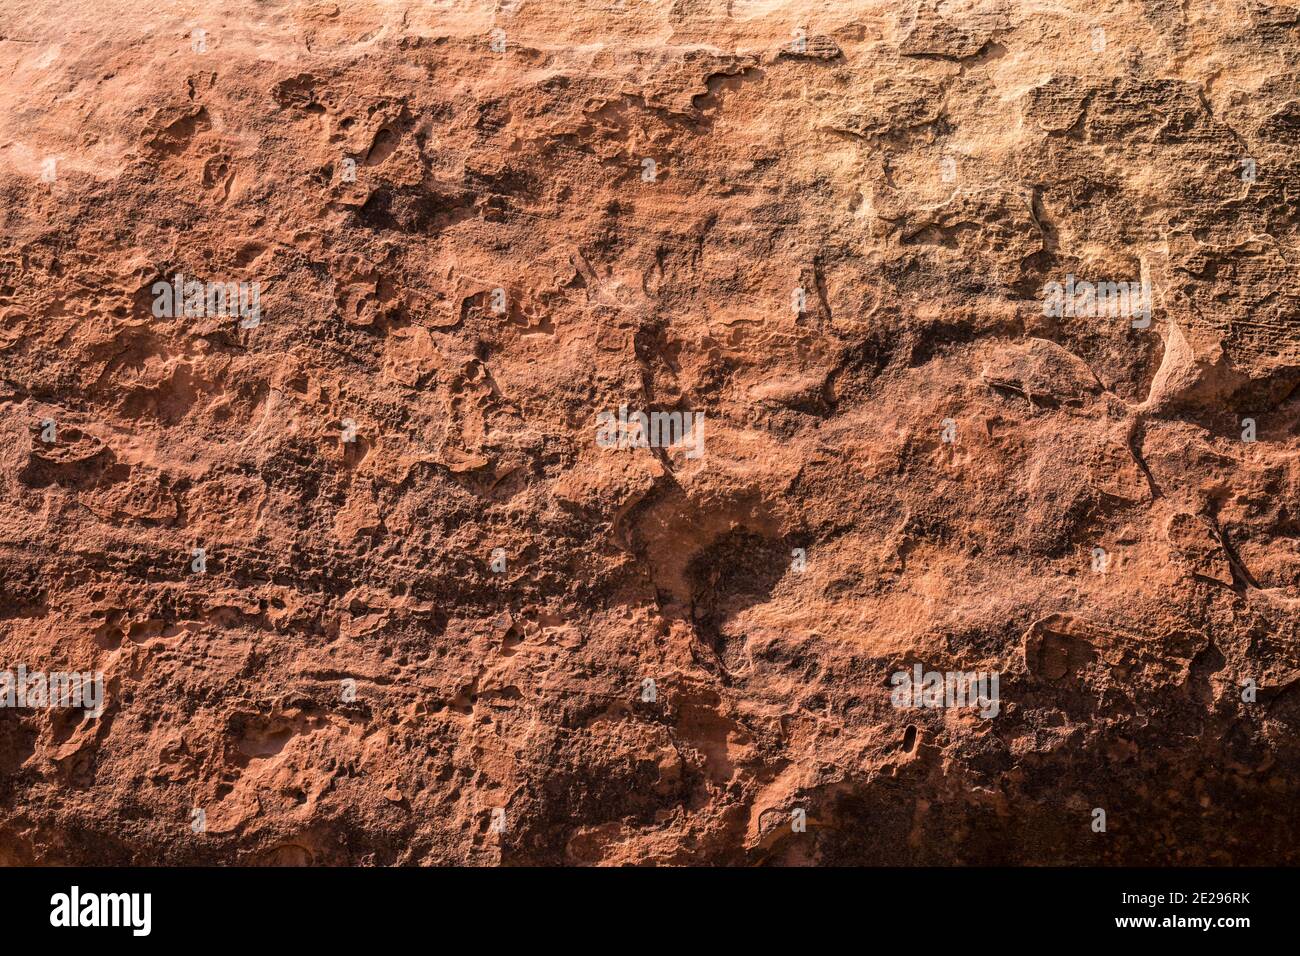 Sandstone rock wall in Canyonlands National Park, Utah, USA. Stock Photo